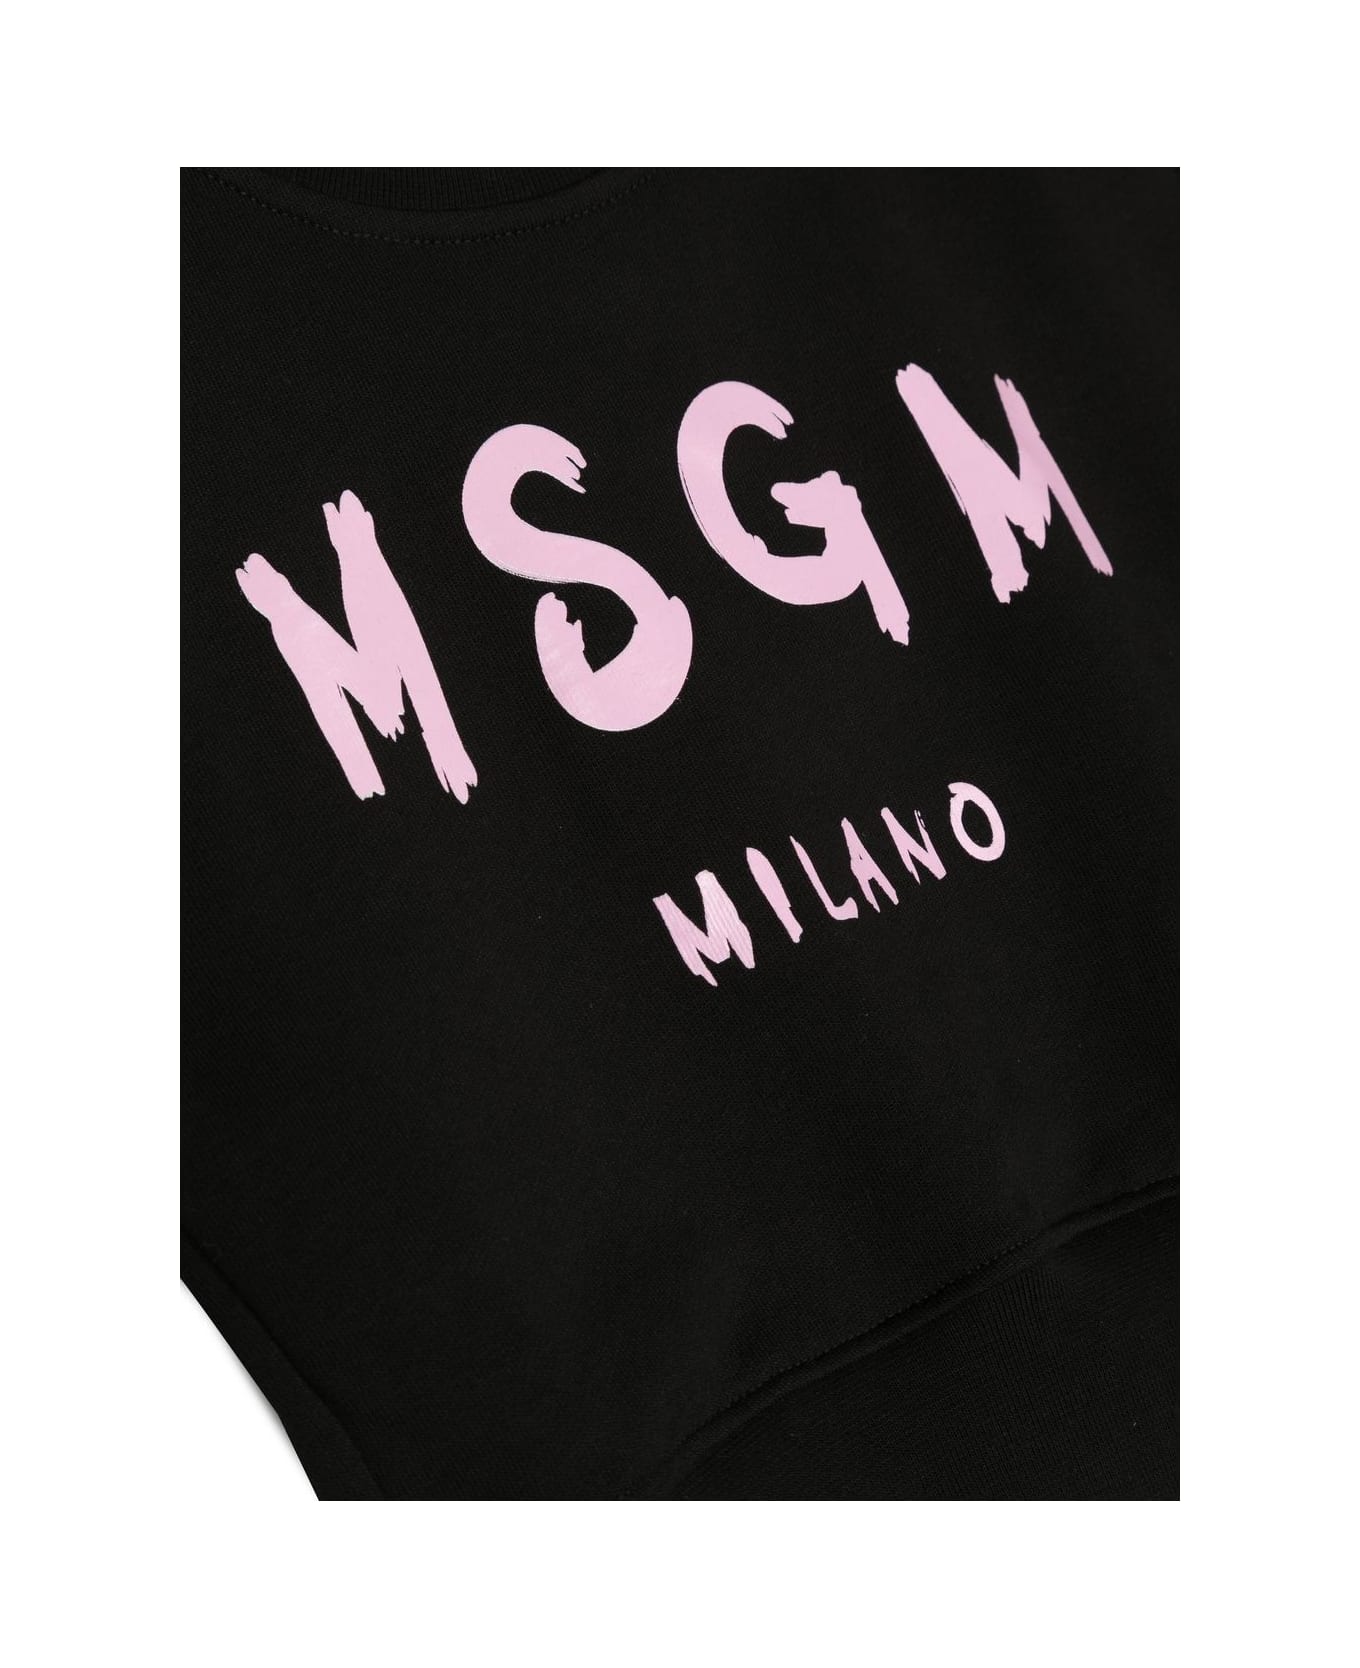 MSGM Sweatshirt With Print - Black